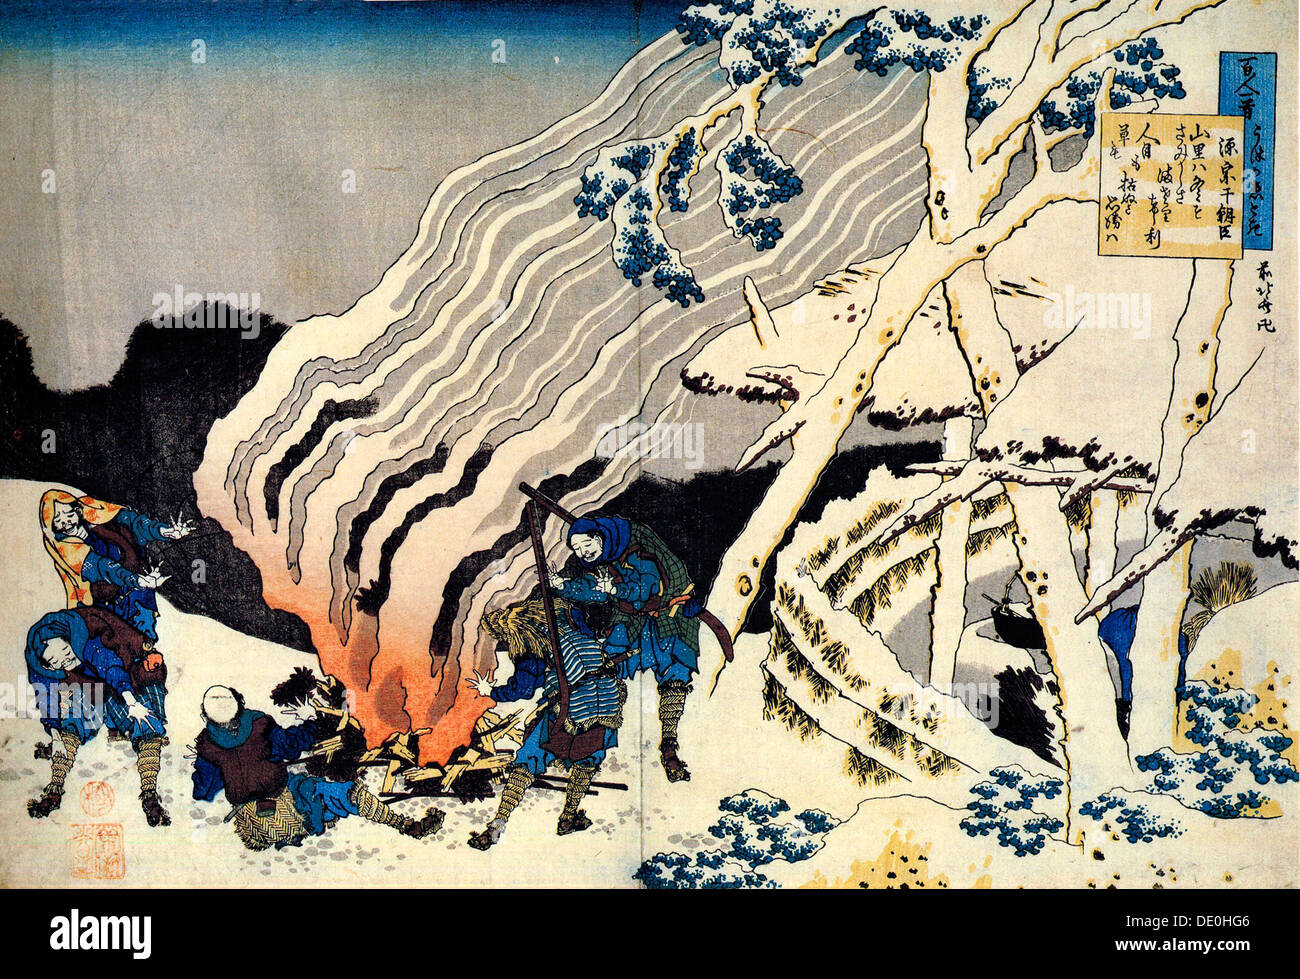 From the series Hundred Poems by One Hundred Poets: Minamoto no Muneyuki, c1830.  Artist: Hokusai Stock Photo